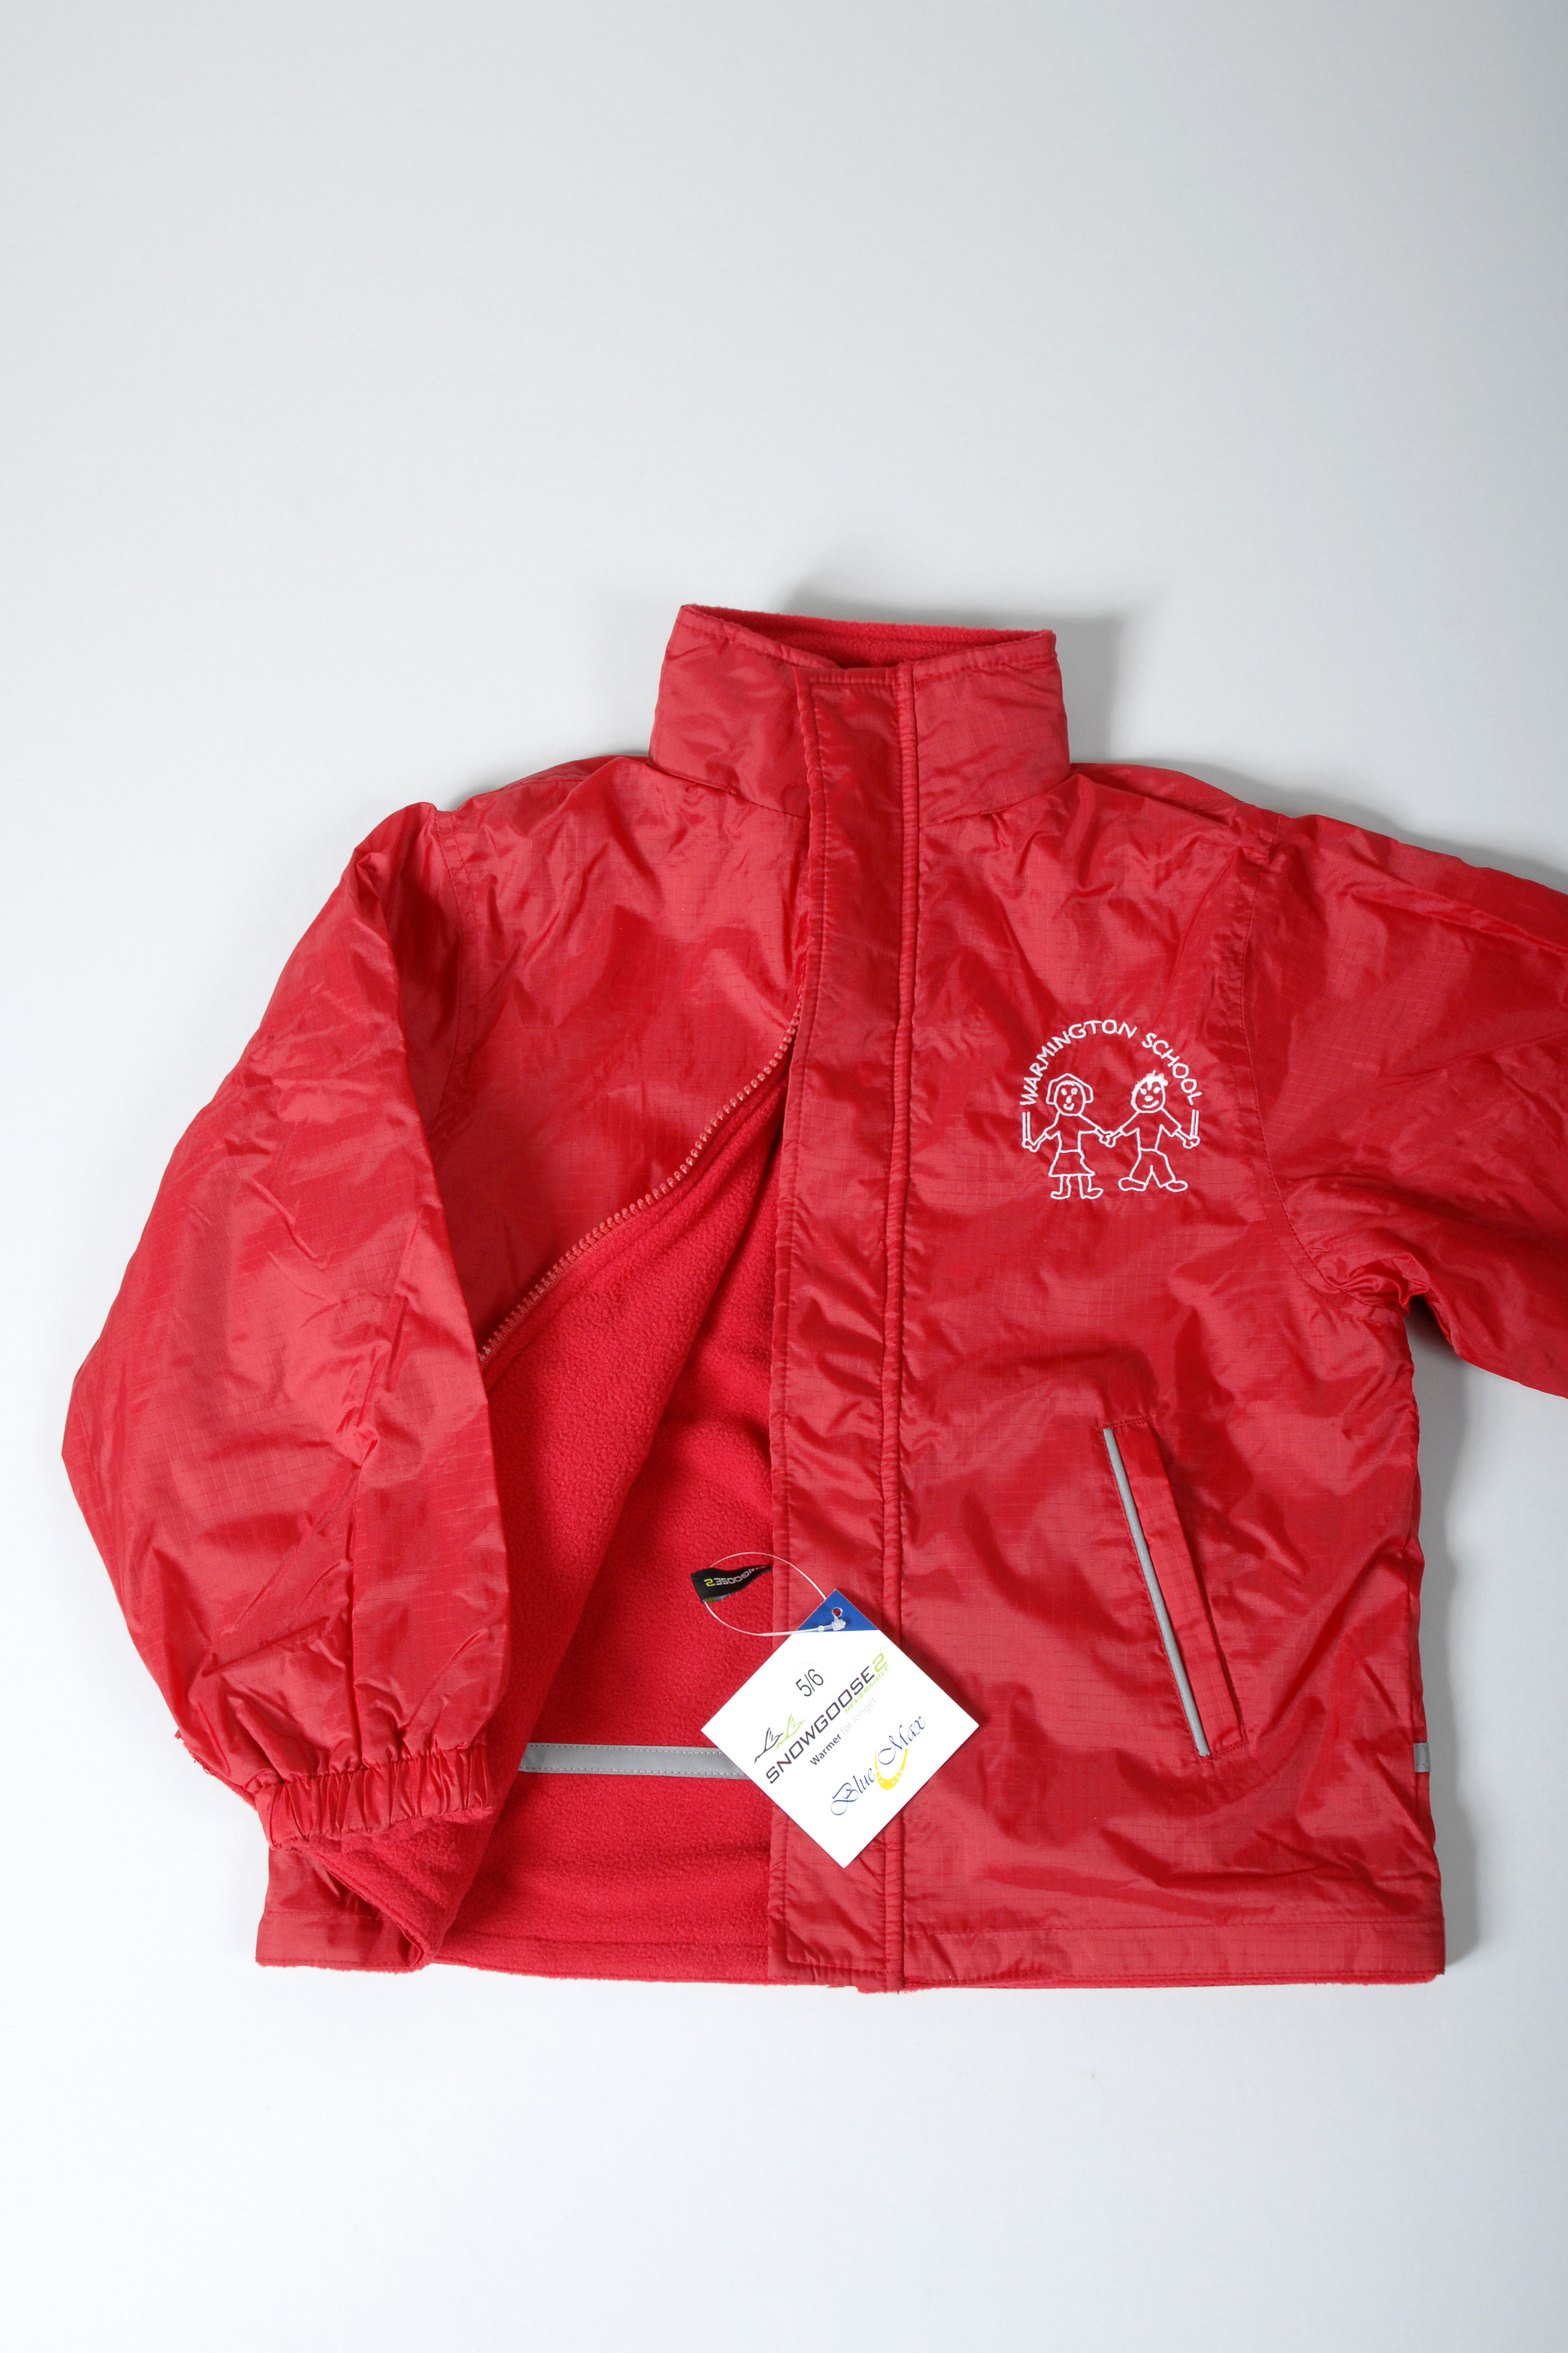 Red Waterproof Jacket with School Logo - Age 11-12